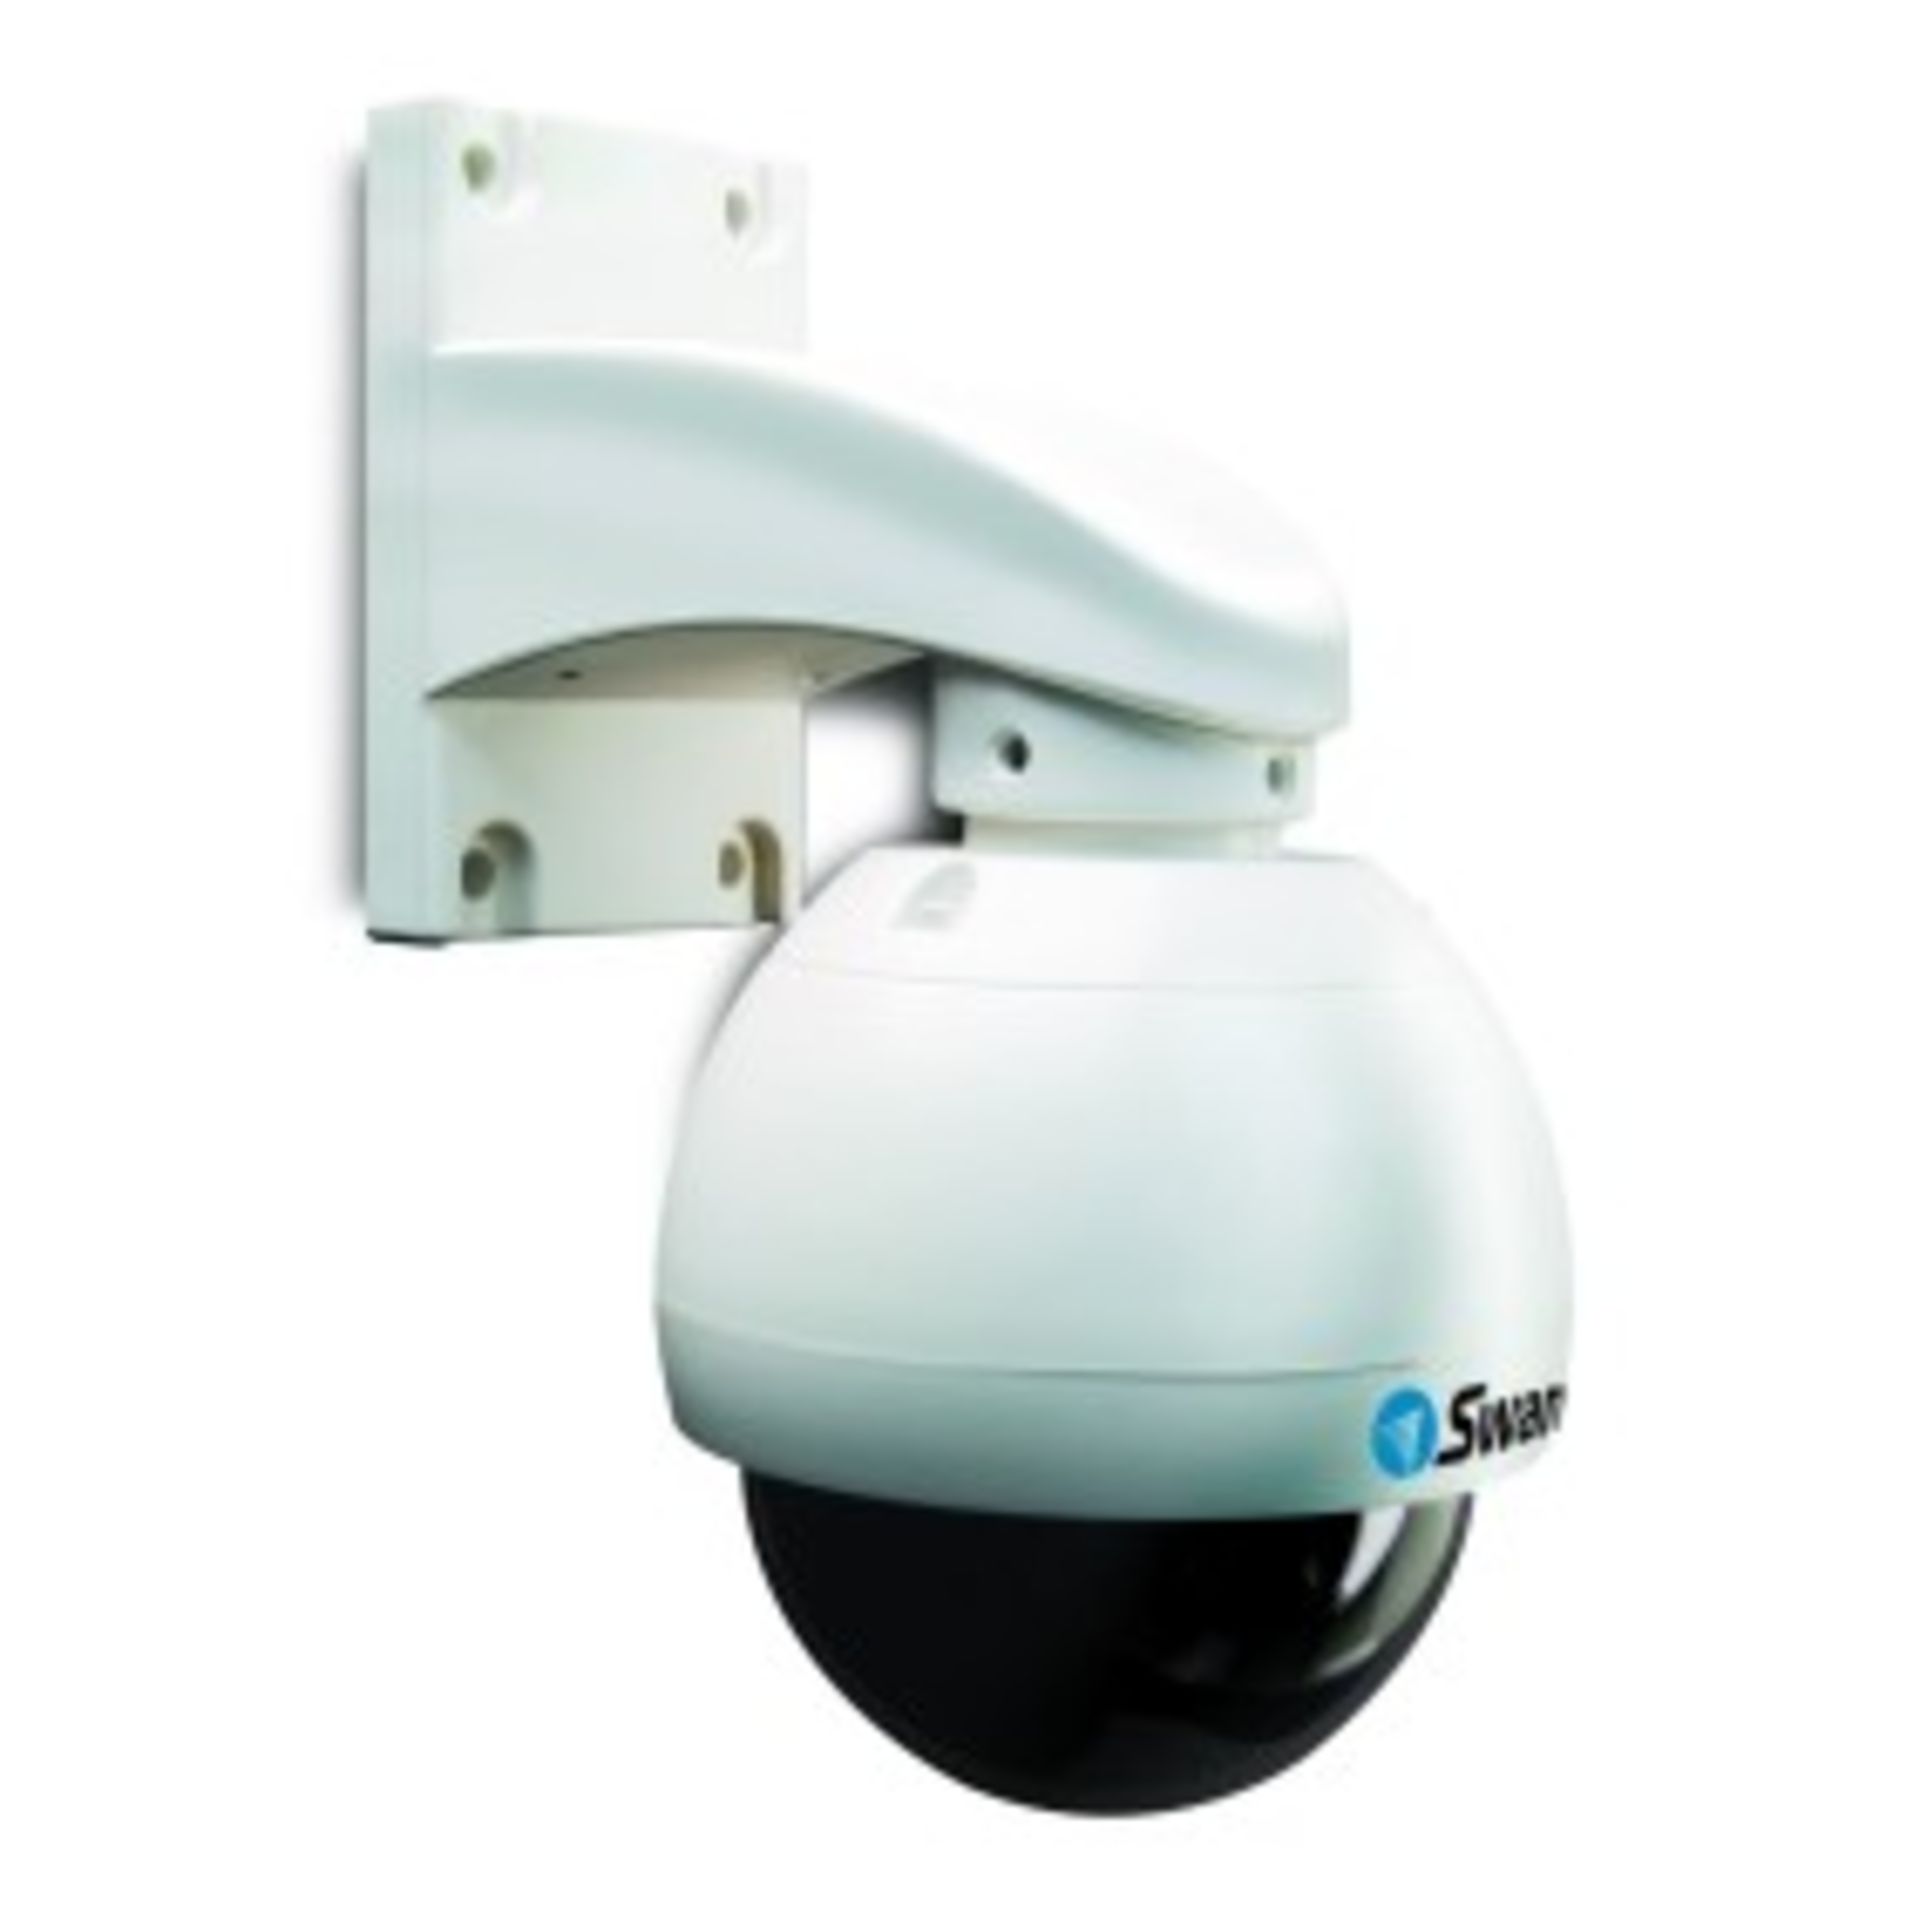 V *TRADE QTY* Brand New Swann PRO-750 700TVL PTZ (Pan Tilt Zoom) Dome Camera - Variable Viewing